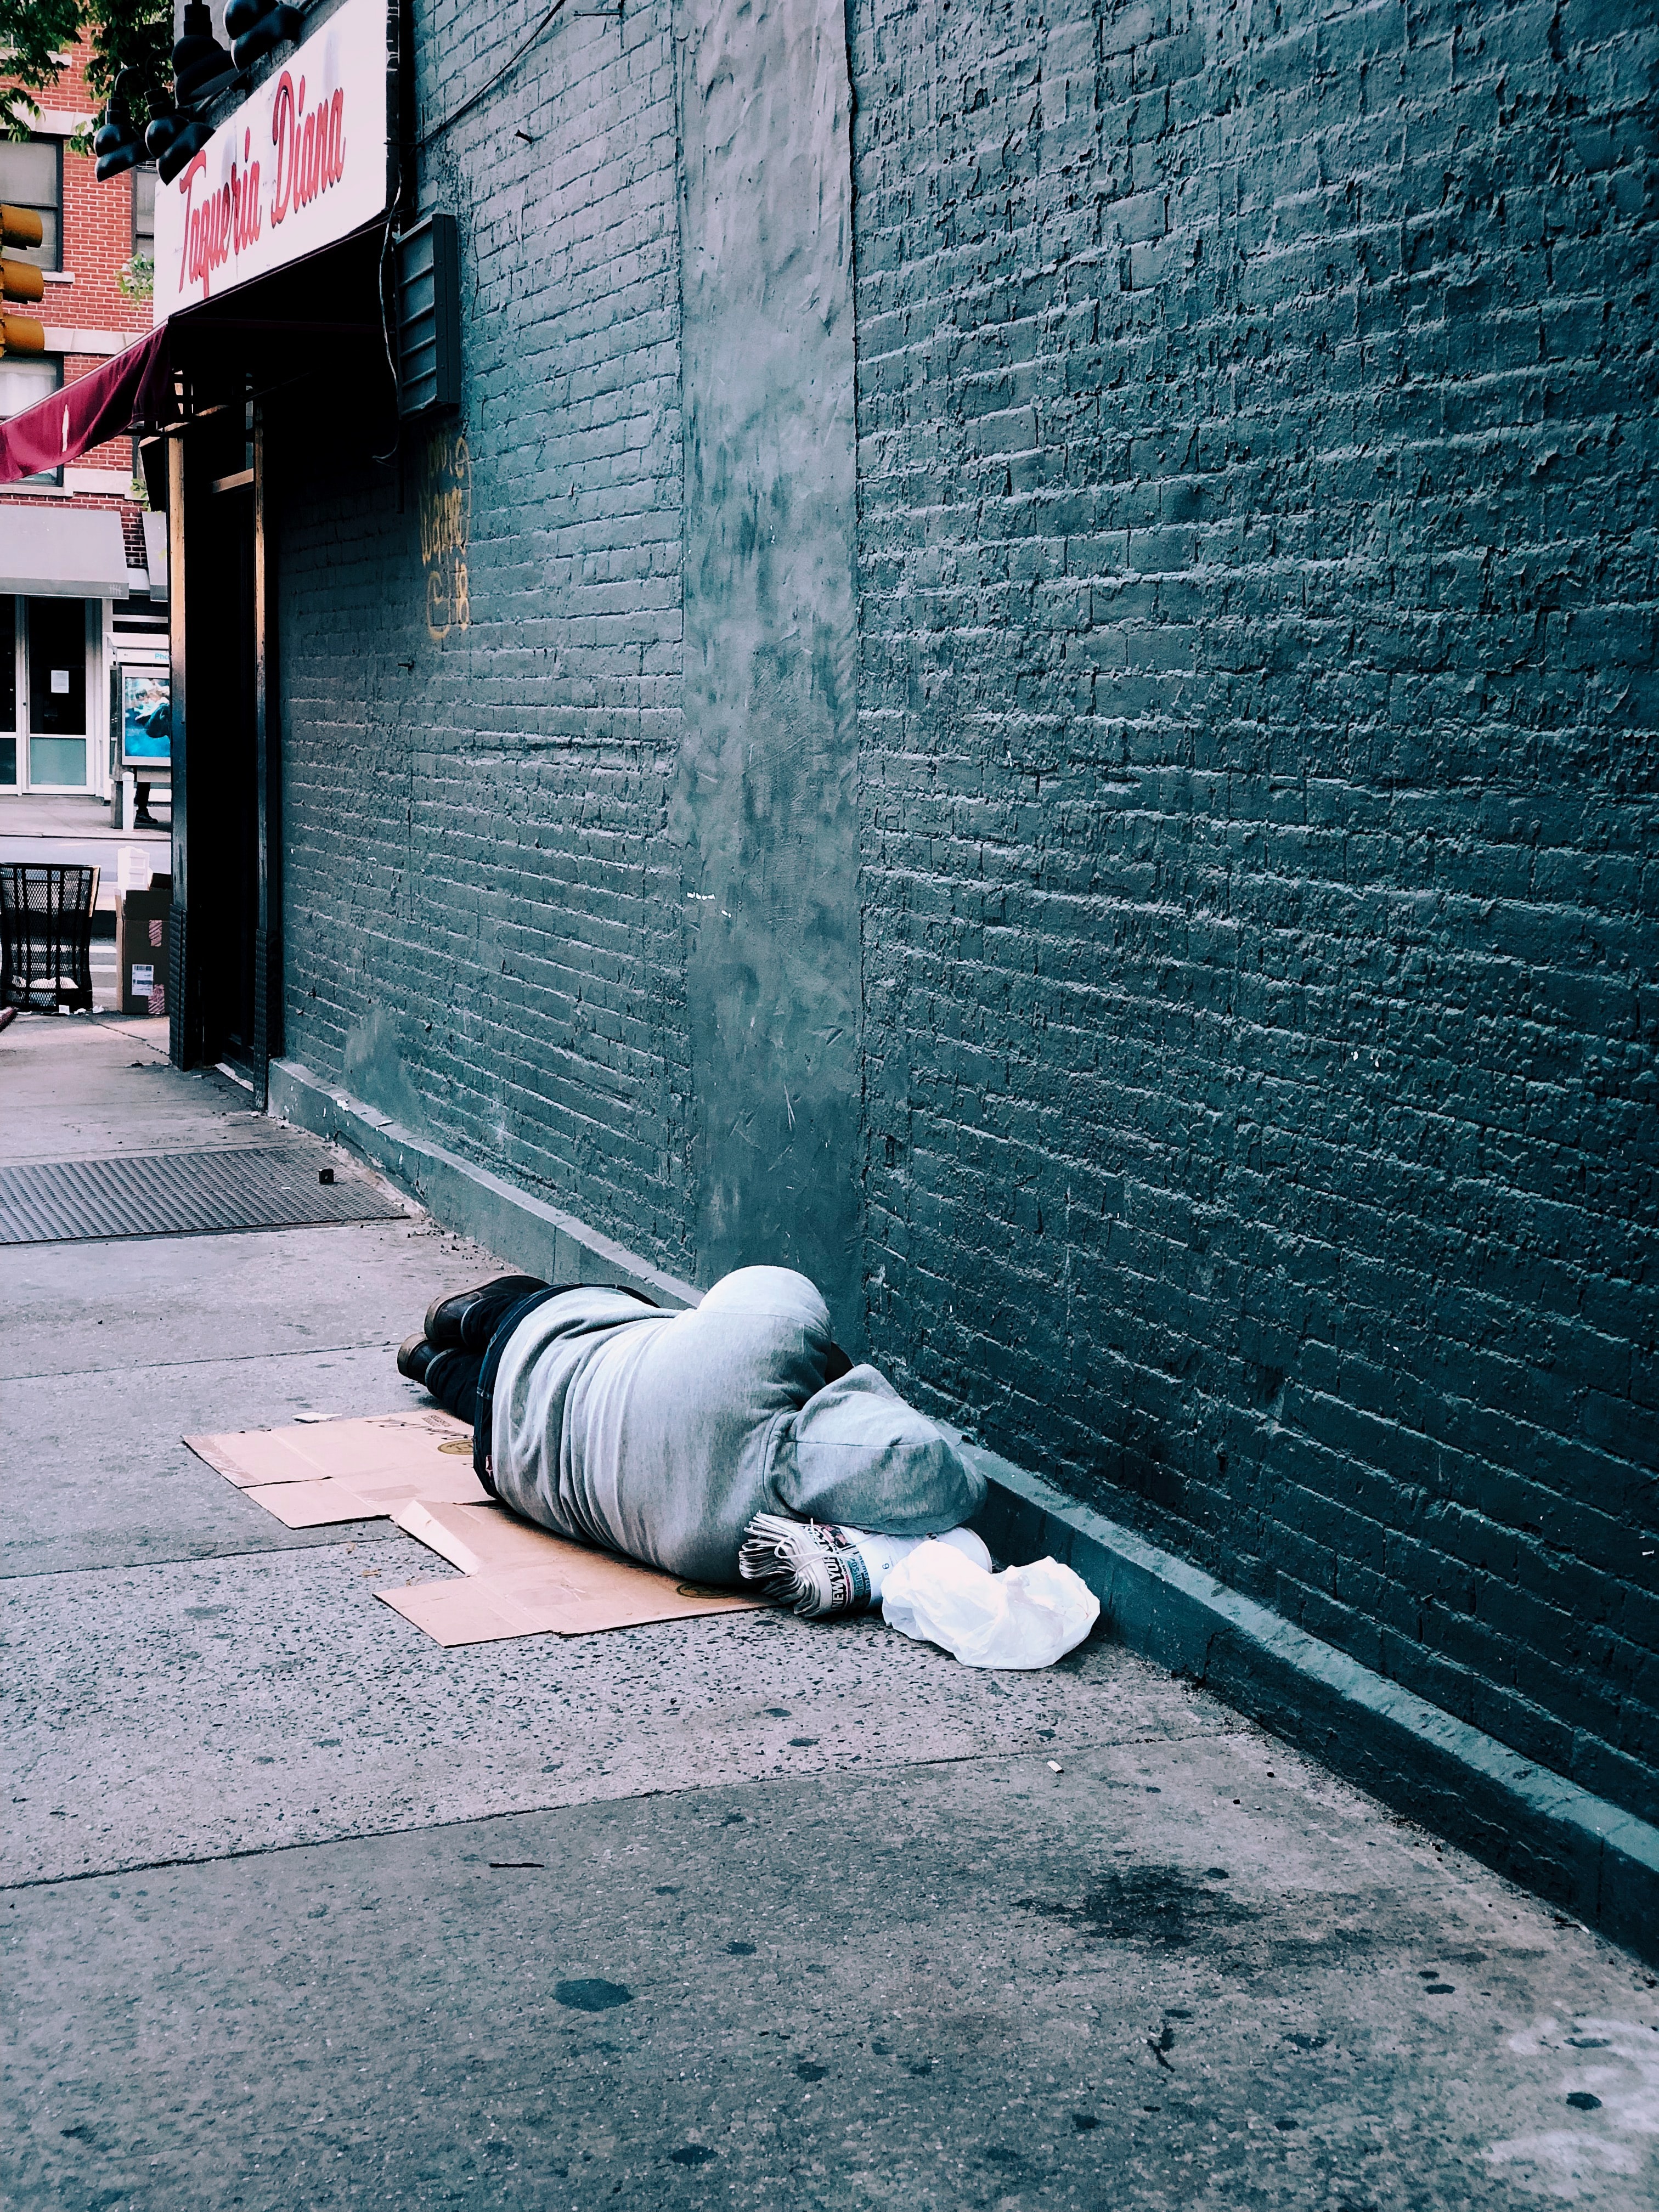 Unemployed Homeless Man on Street